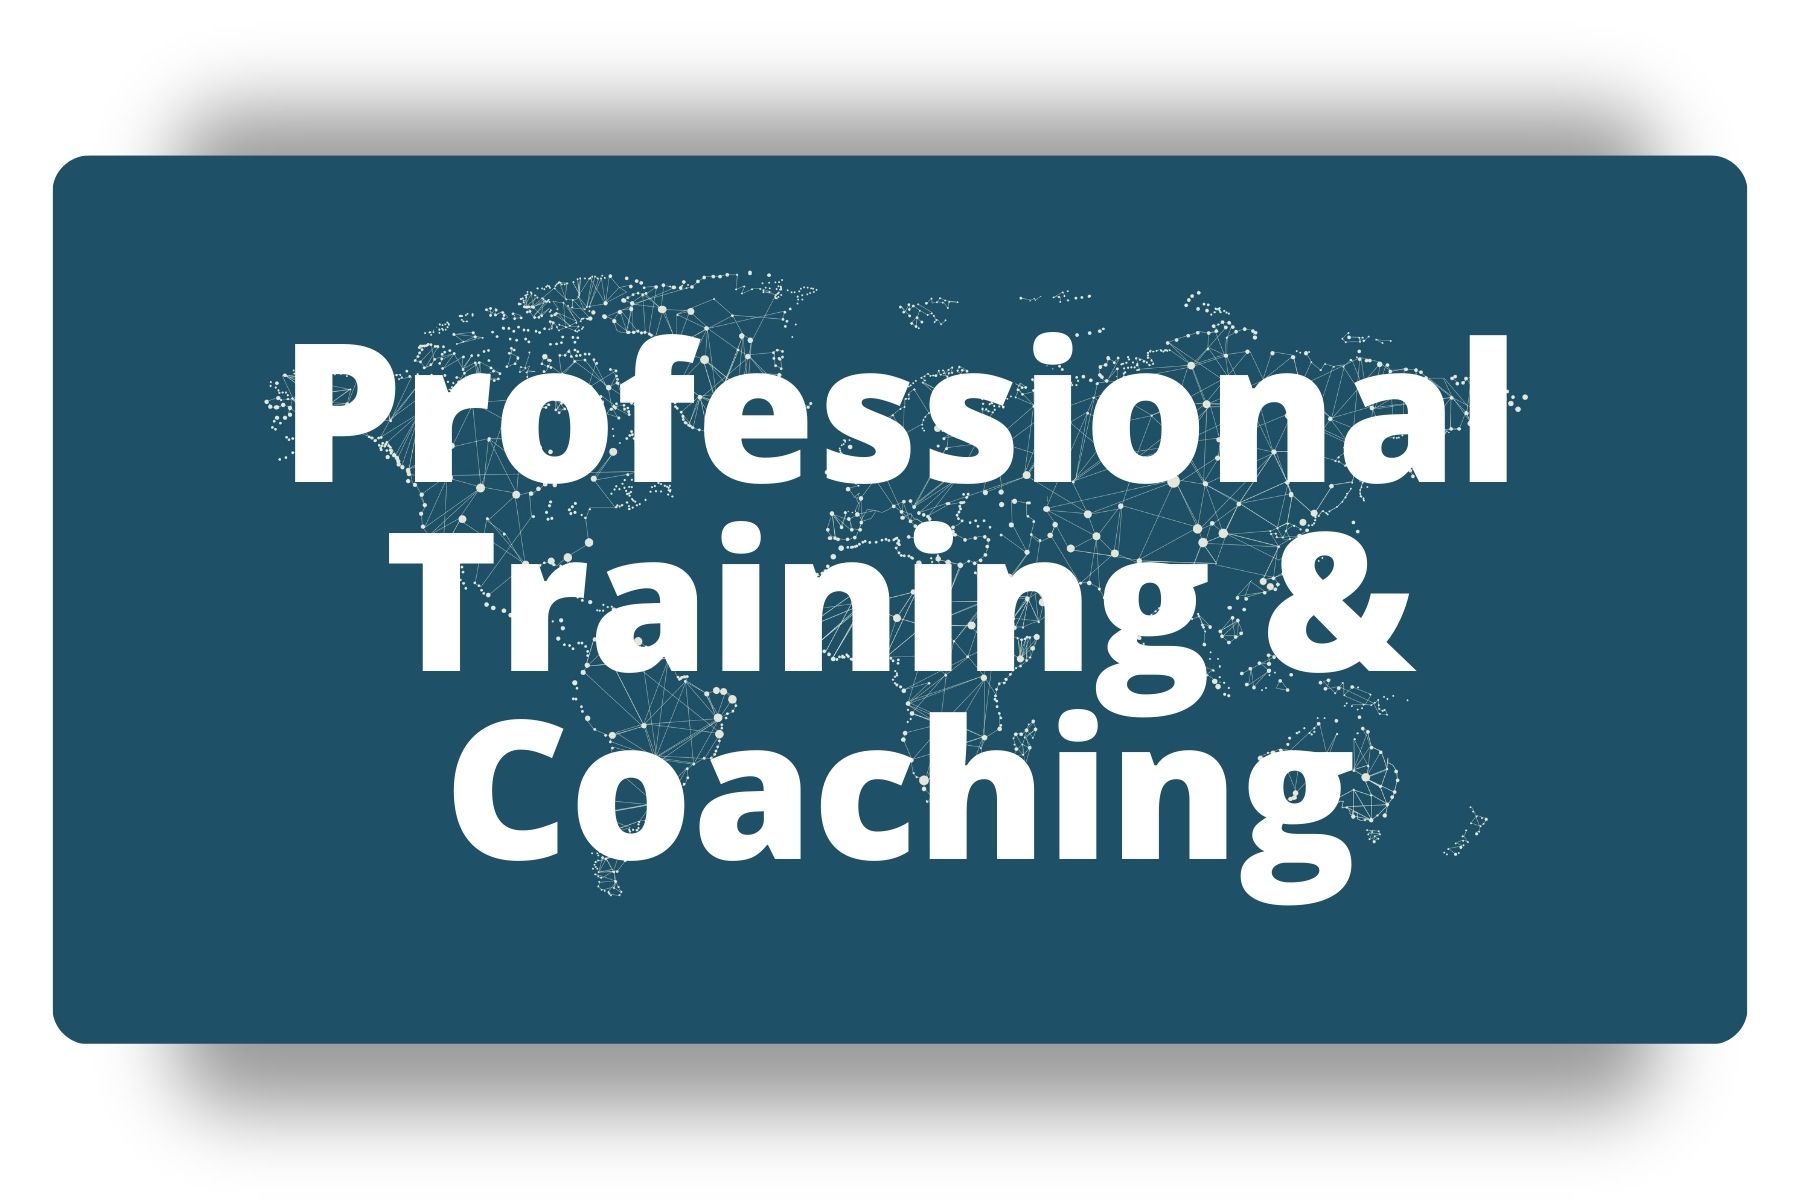 DSMN8's Professional Training & Coaching Leaderboard Hub Image